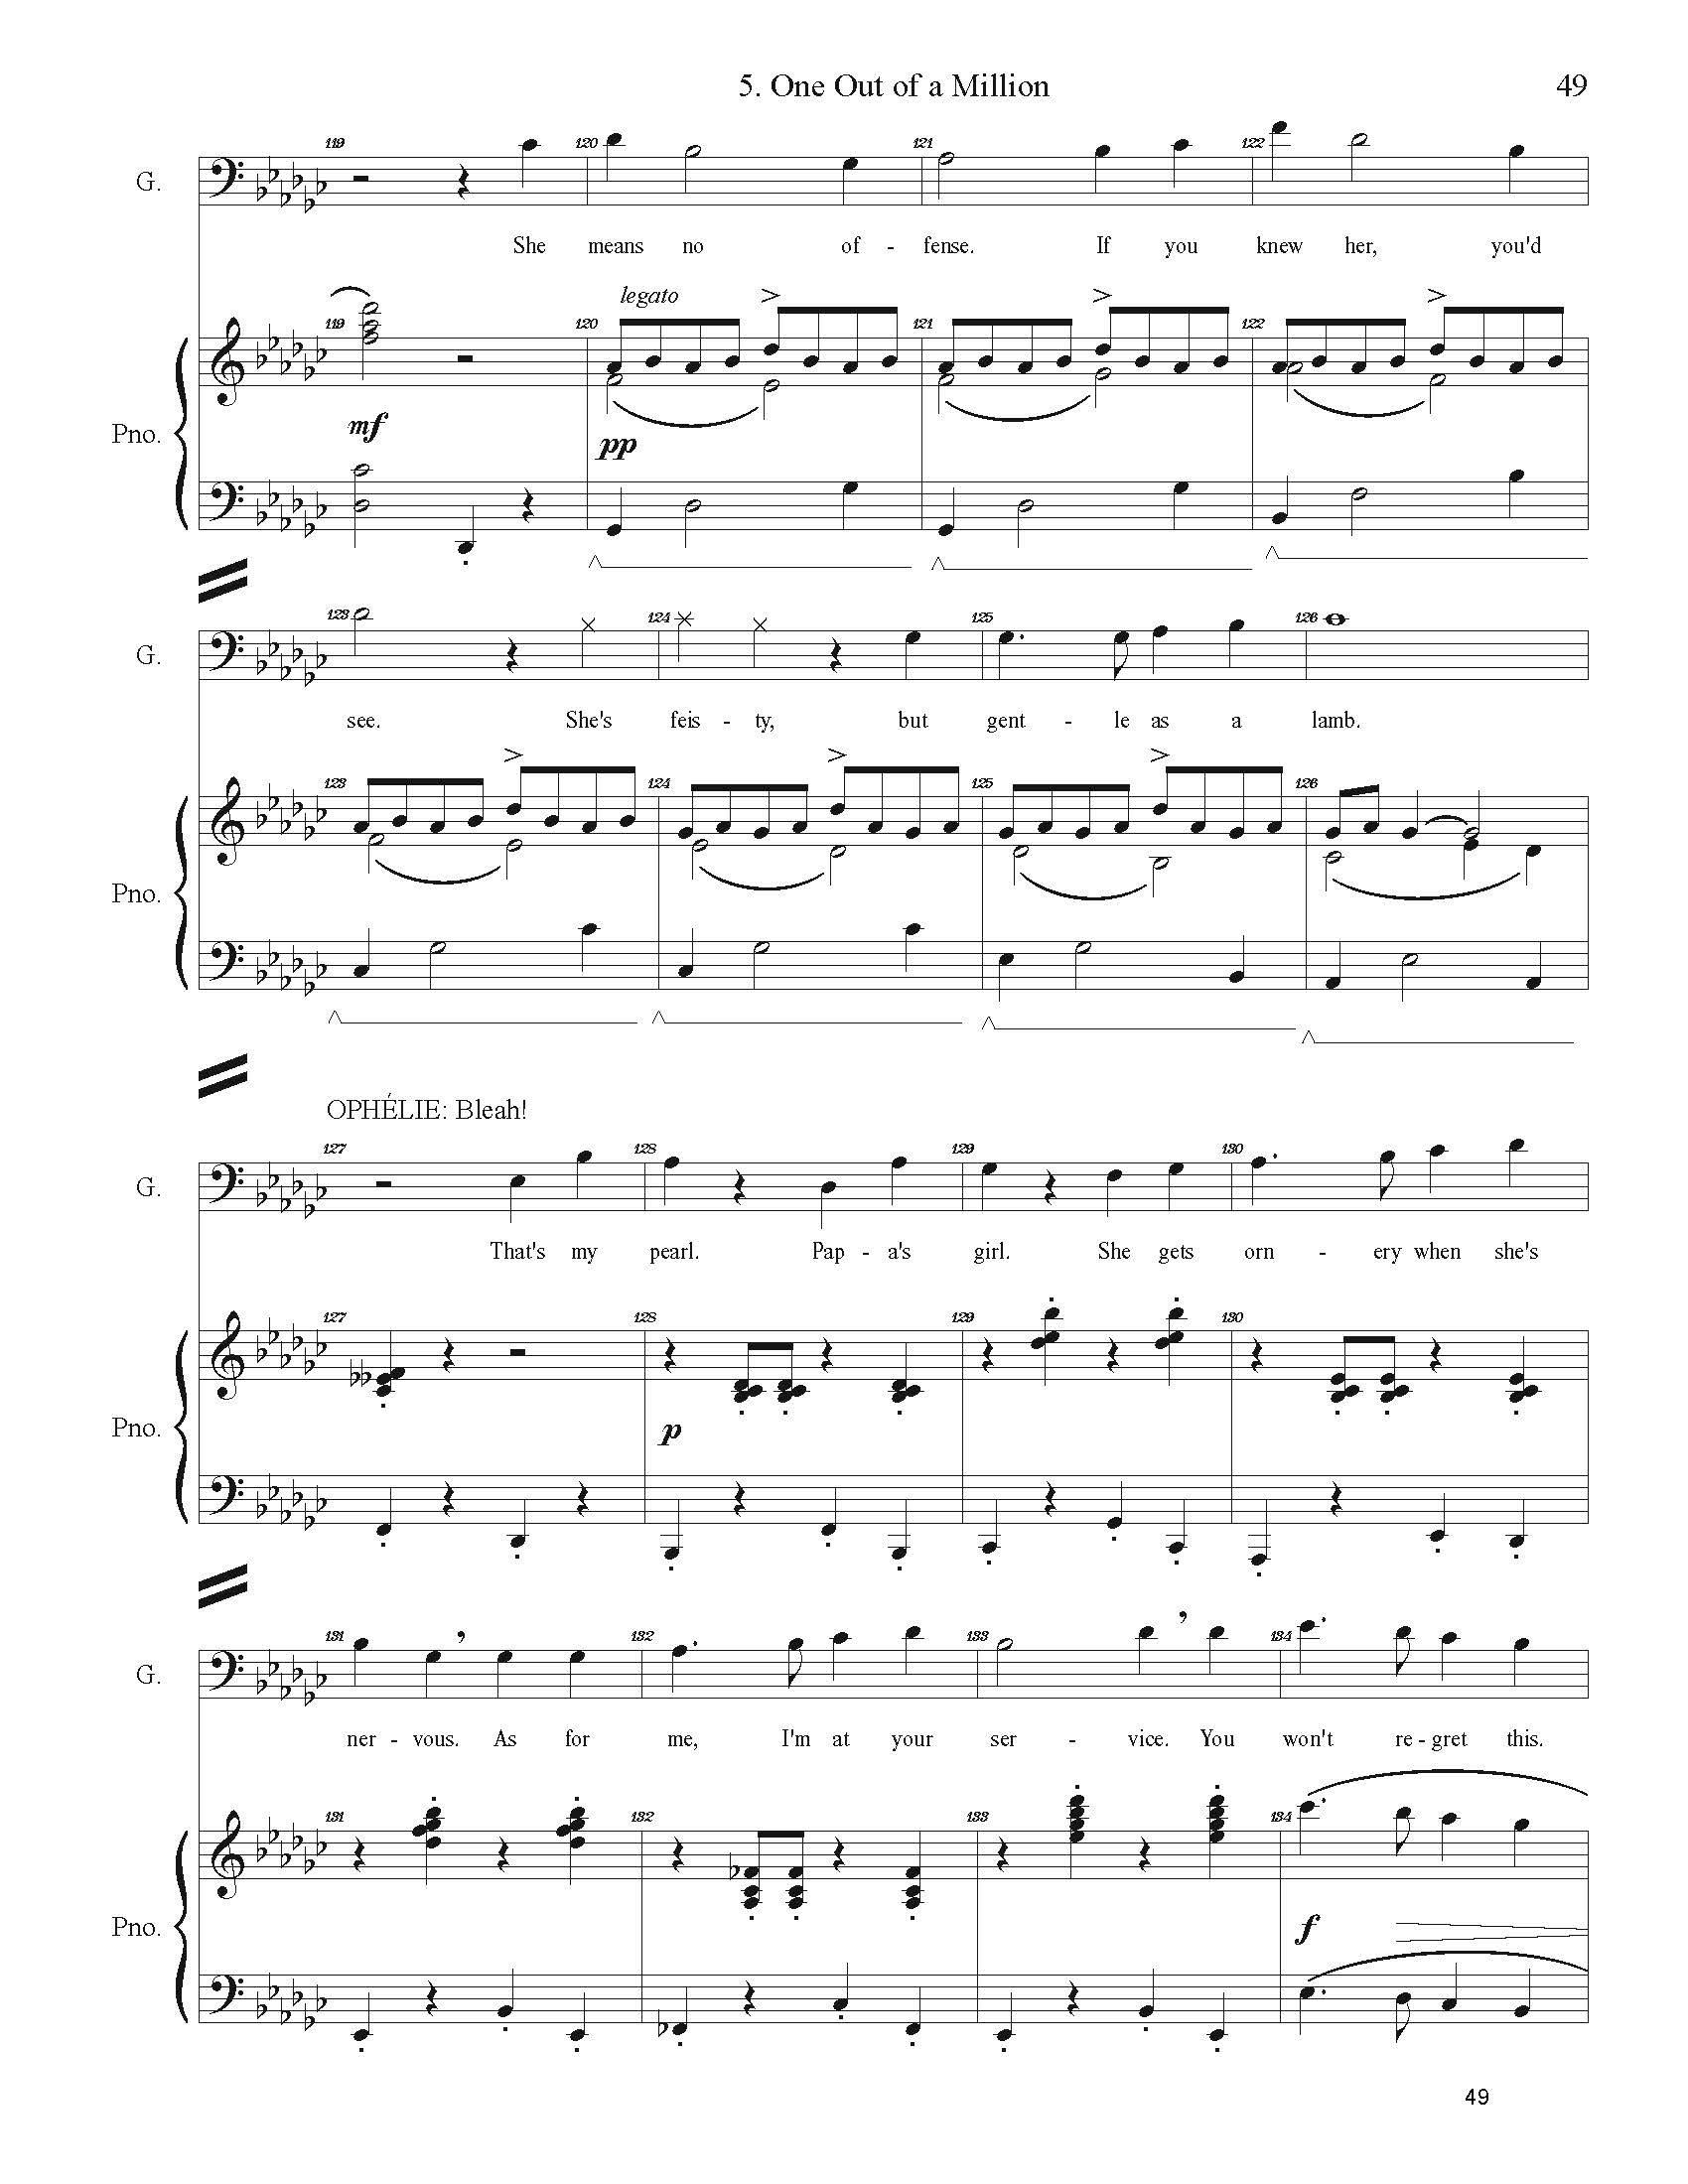 FULL PIANO VOCAL SCORE DRAFT 1 - Score_Page_049.jpg